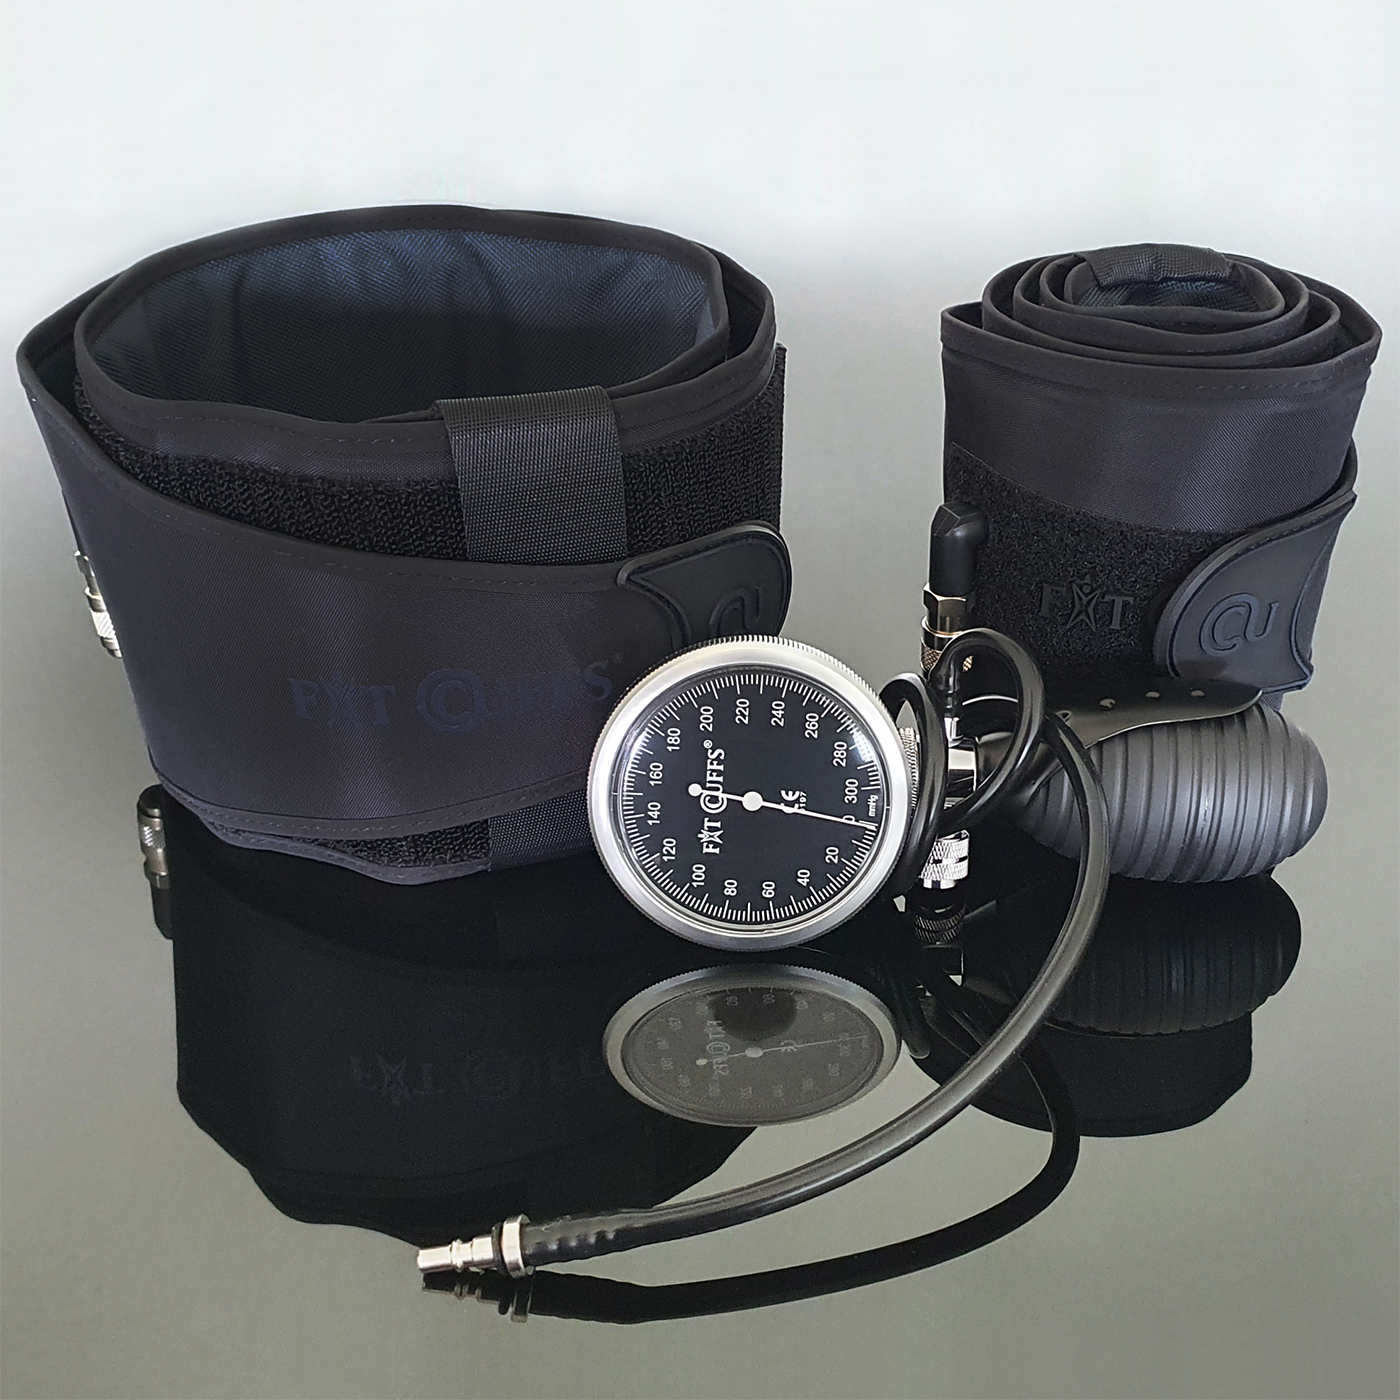 Se Fit Cuffs - Performance Lower V3.1 - Standard - Black hos Fitcuffs.com